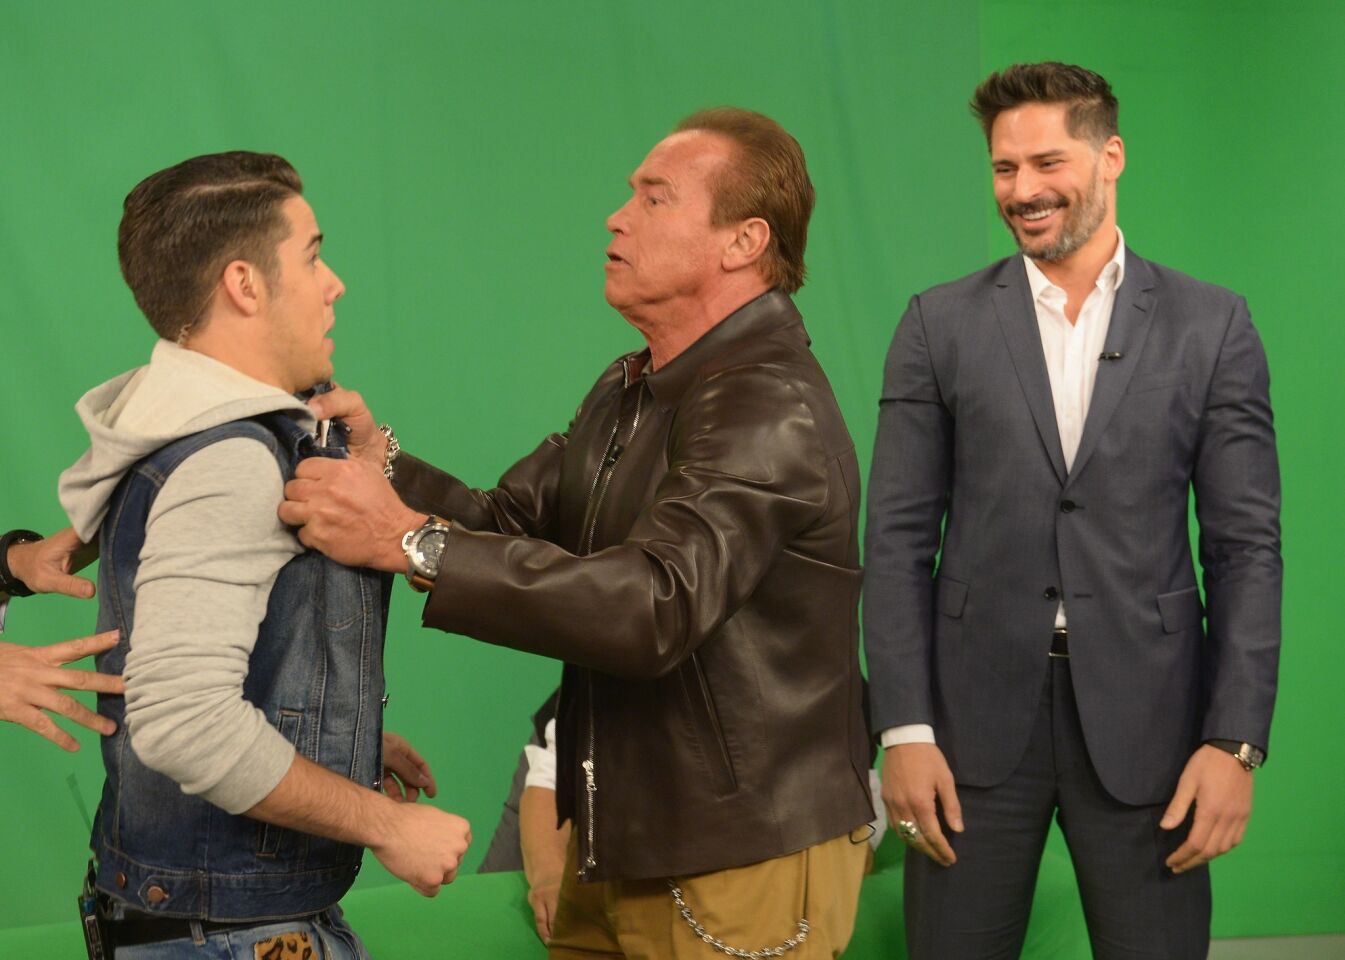 Arnold Schwarzenegger performs on the set of "Despierta America" with Joe Manganiello at Univision Headquarters in Miami.